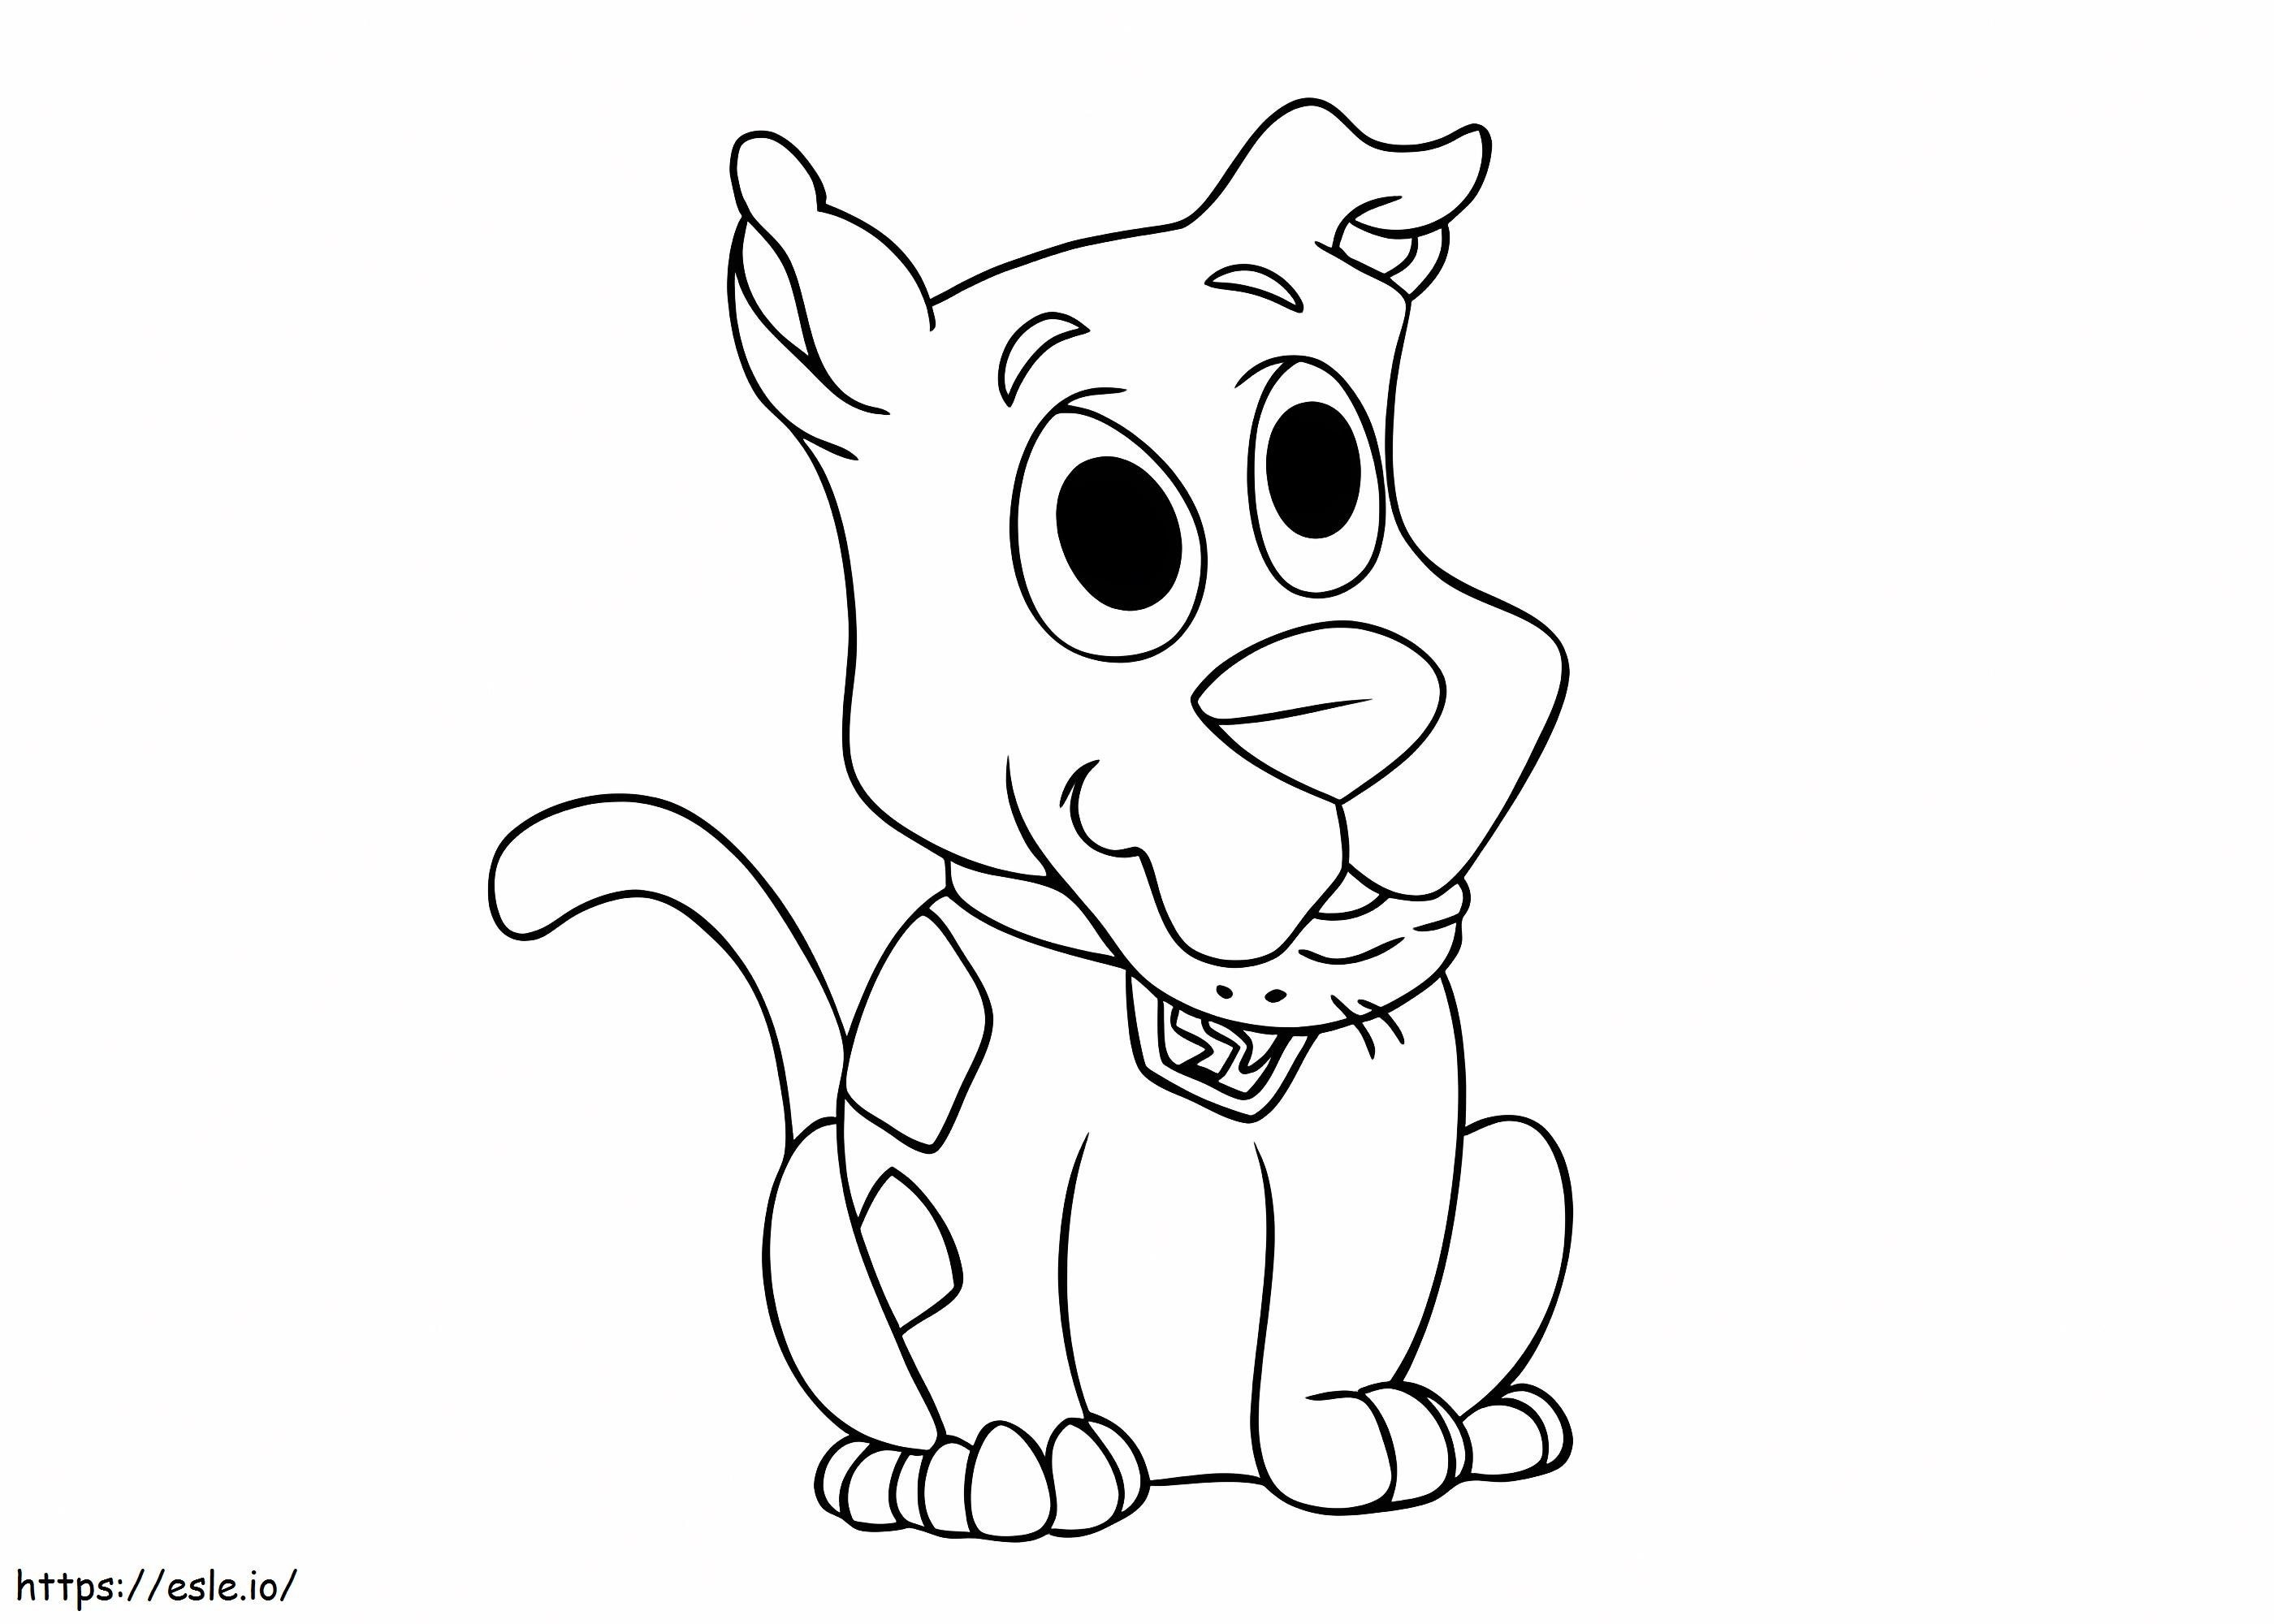 Coloriage 1532427948 Bébé Scooby Doo A4 à imprimer dessin